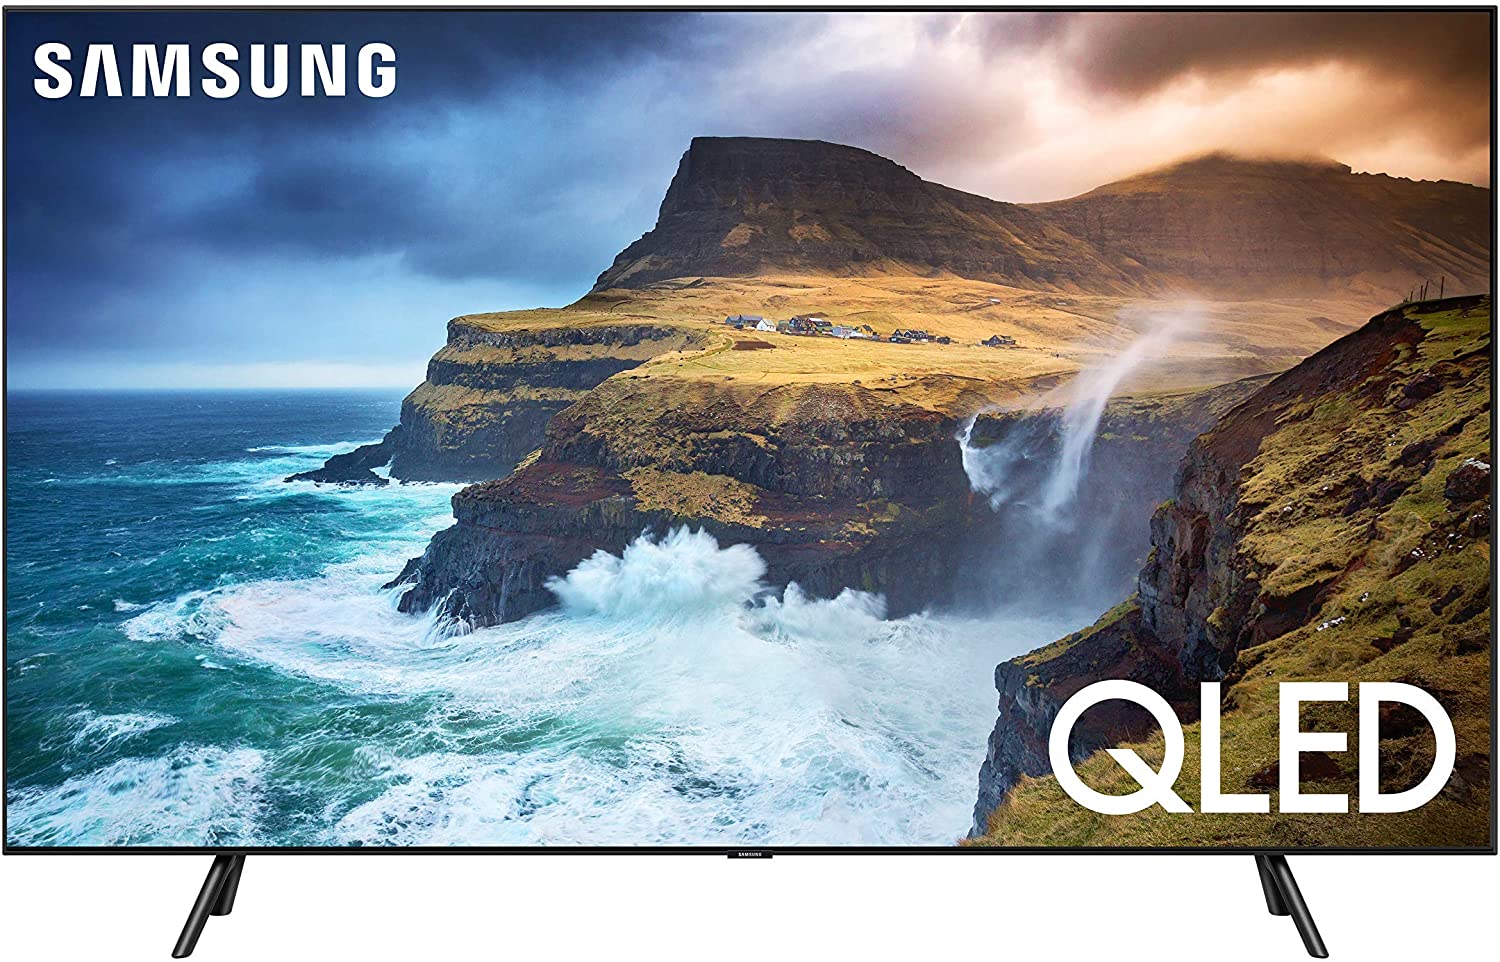 Samsung 82" Class Q7D QLED Smart TV 4K UHD(Refurbished)